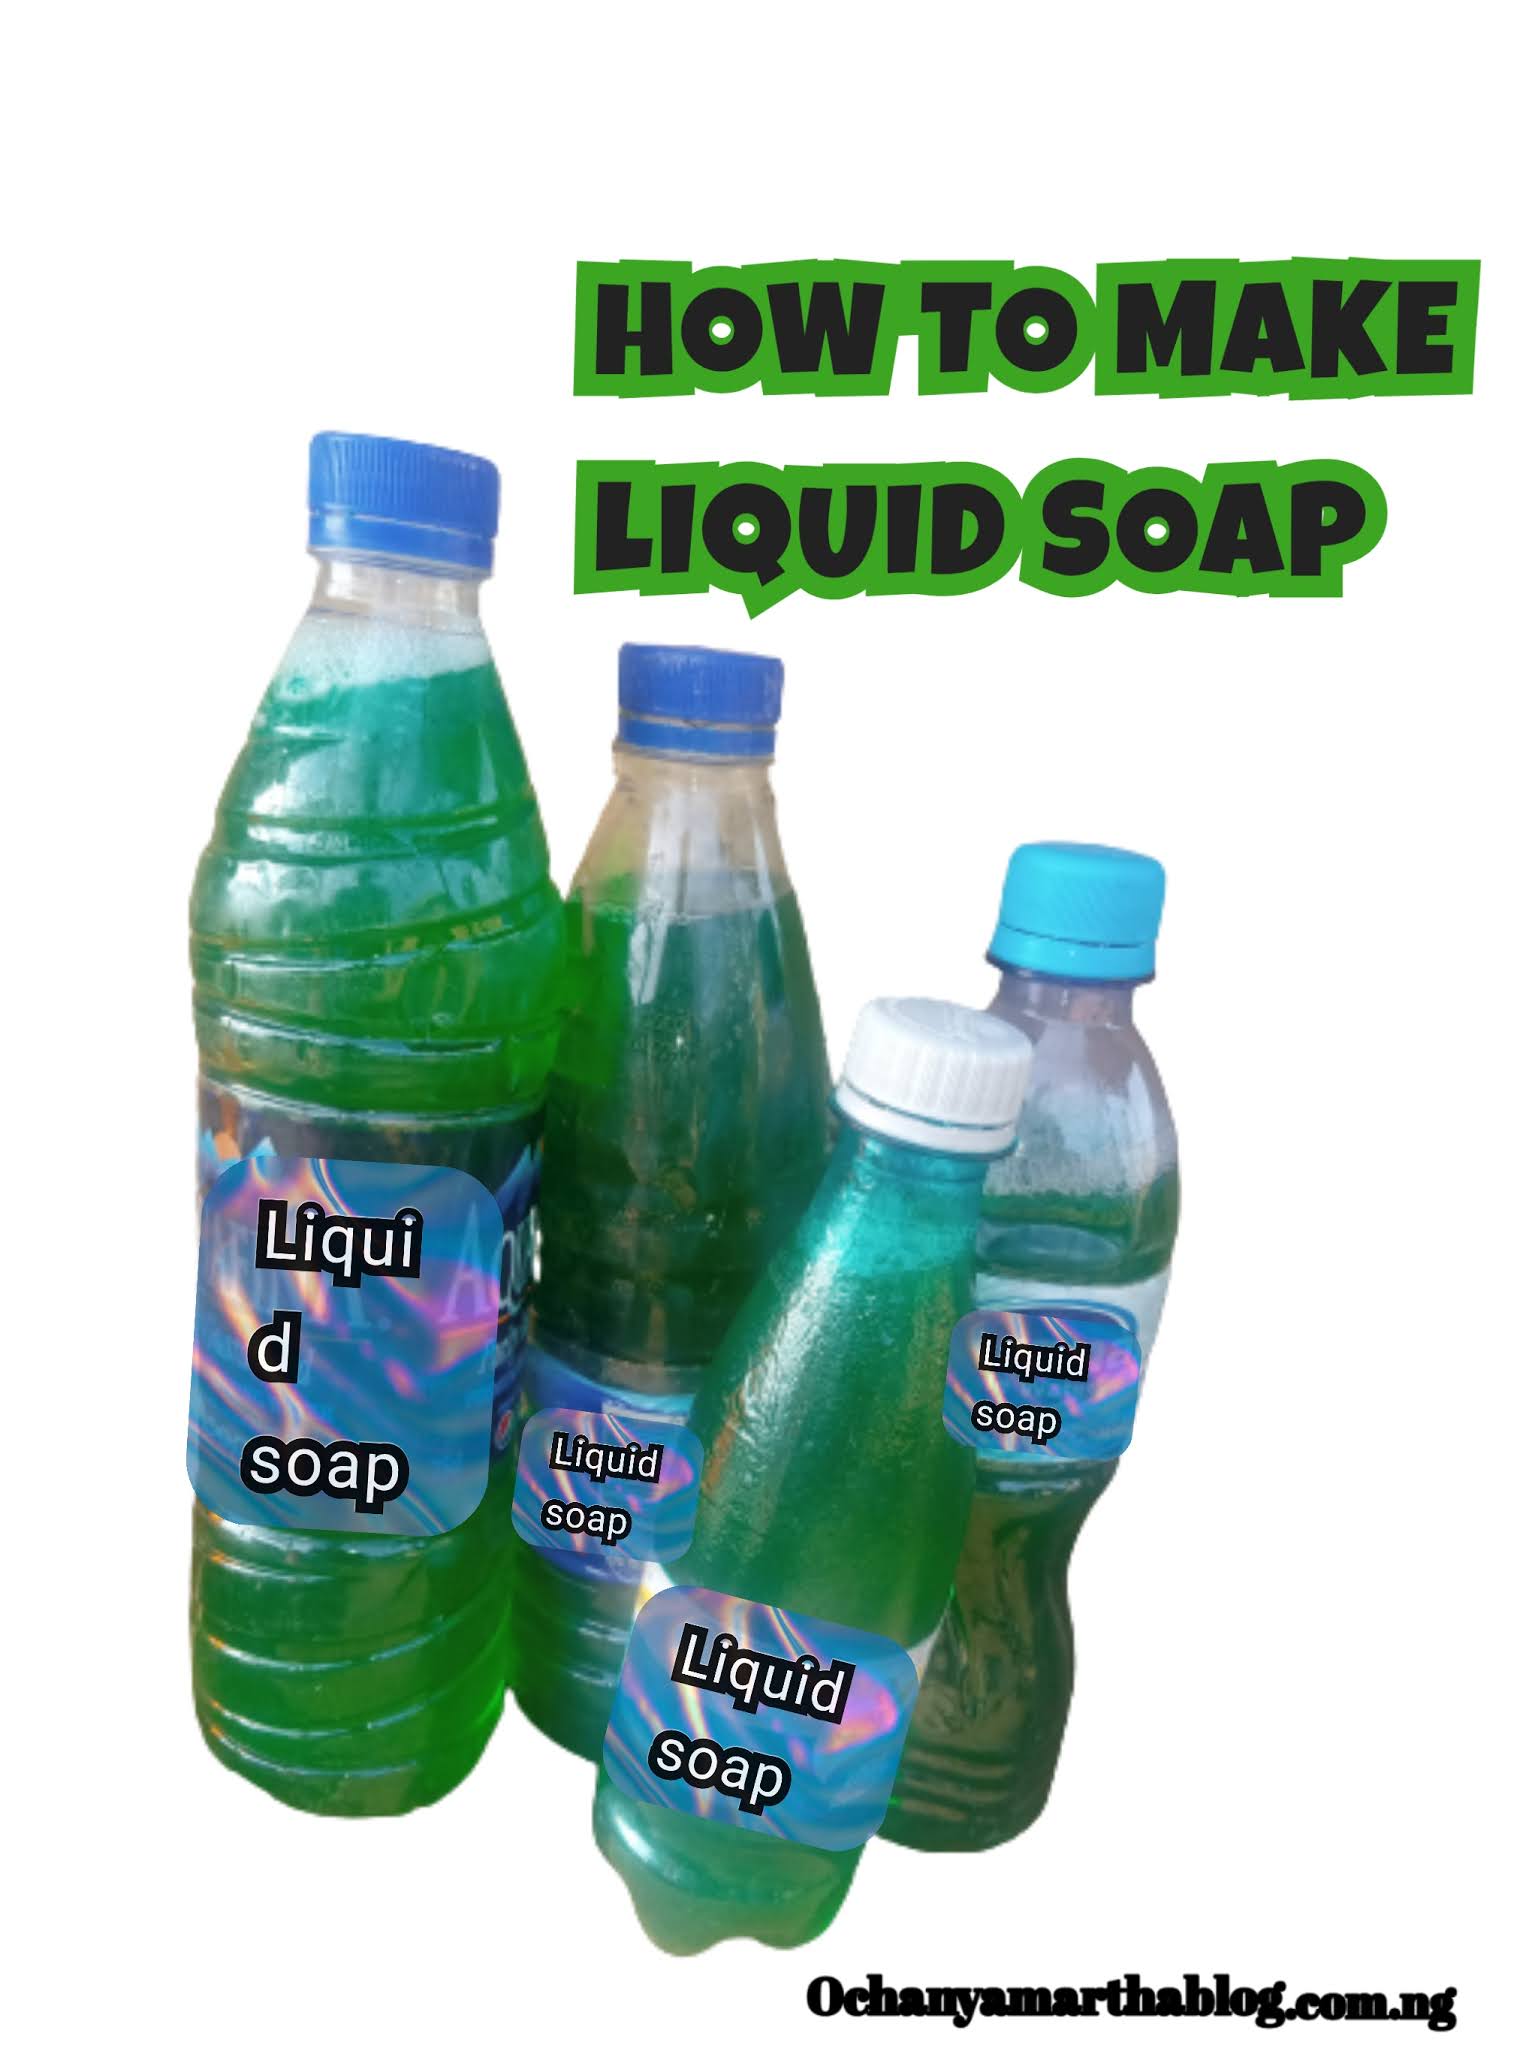 HOW TO MAKE LIQUID SOAP IN NIGERIA